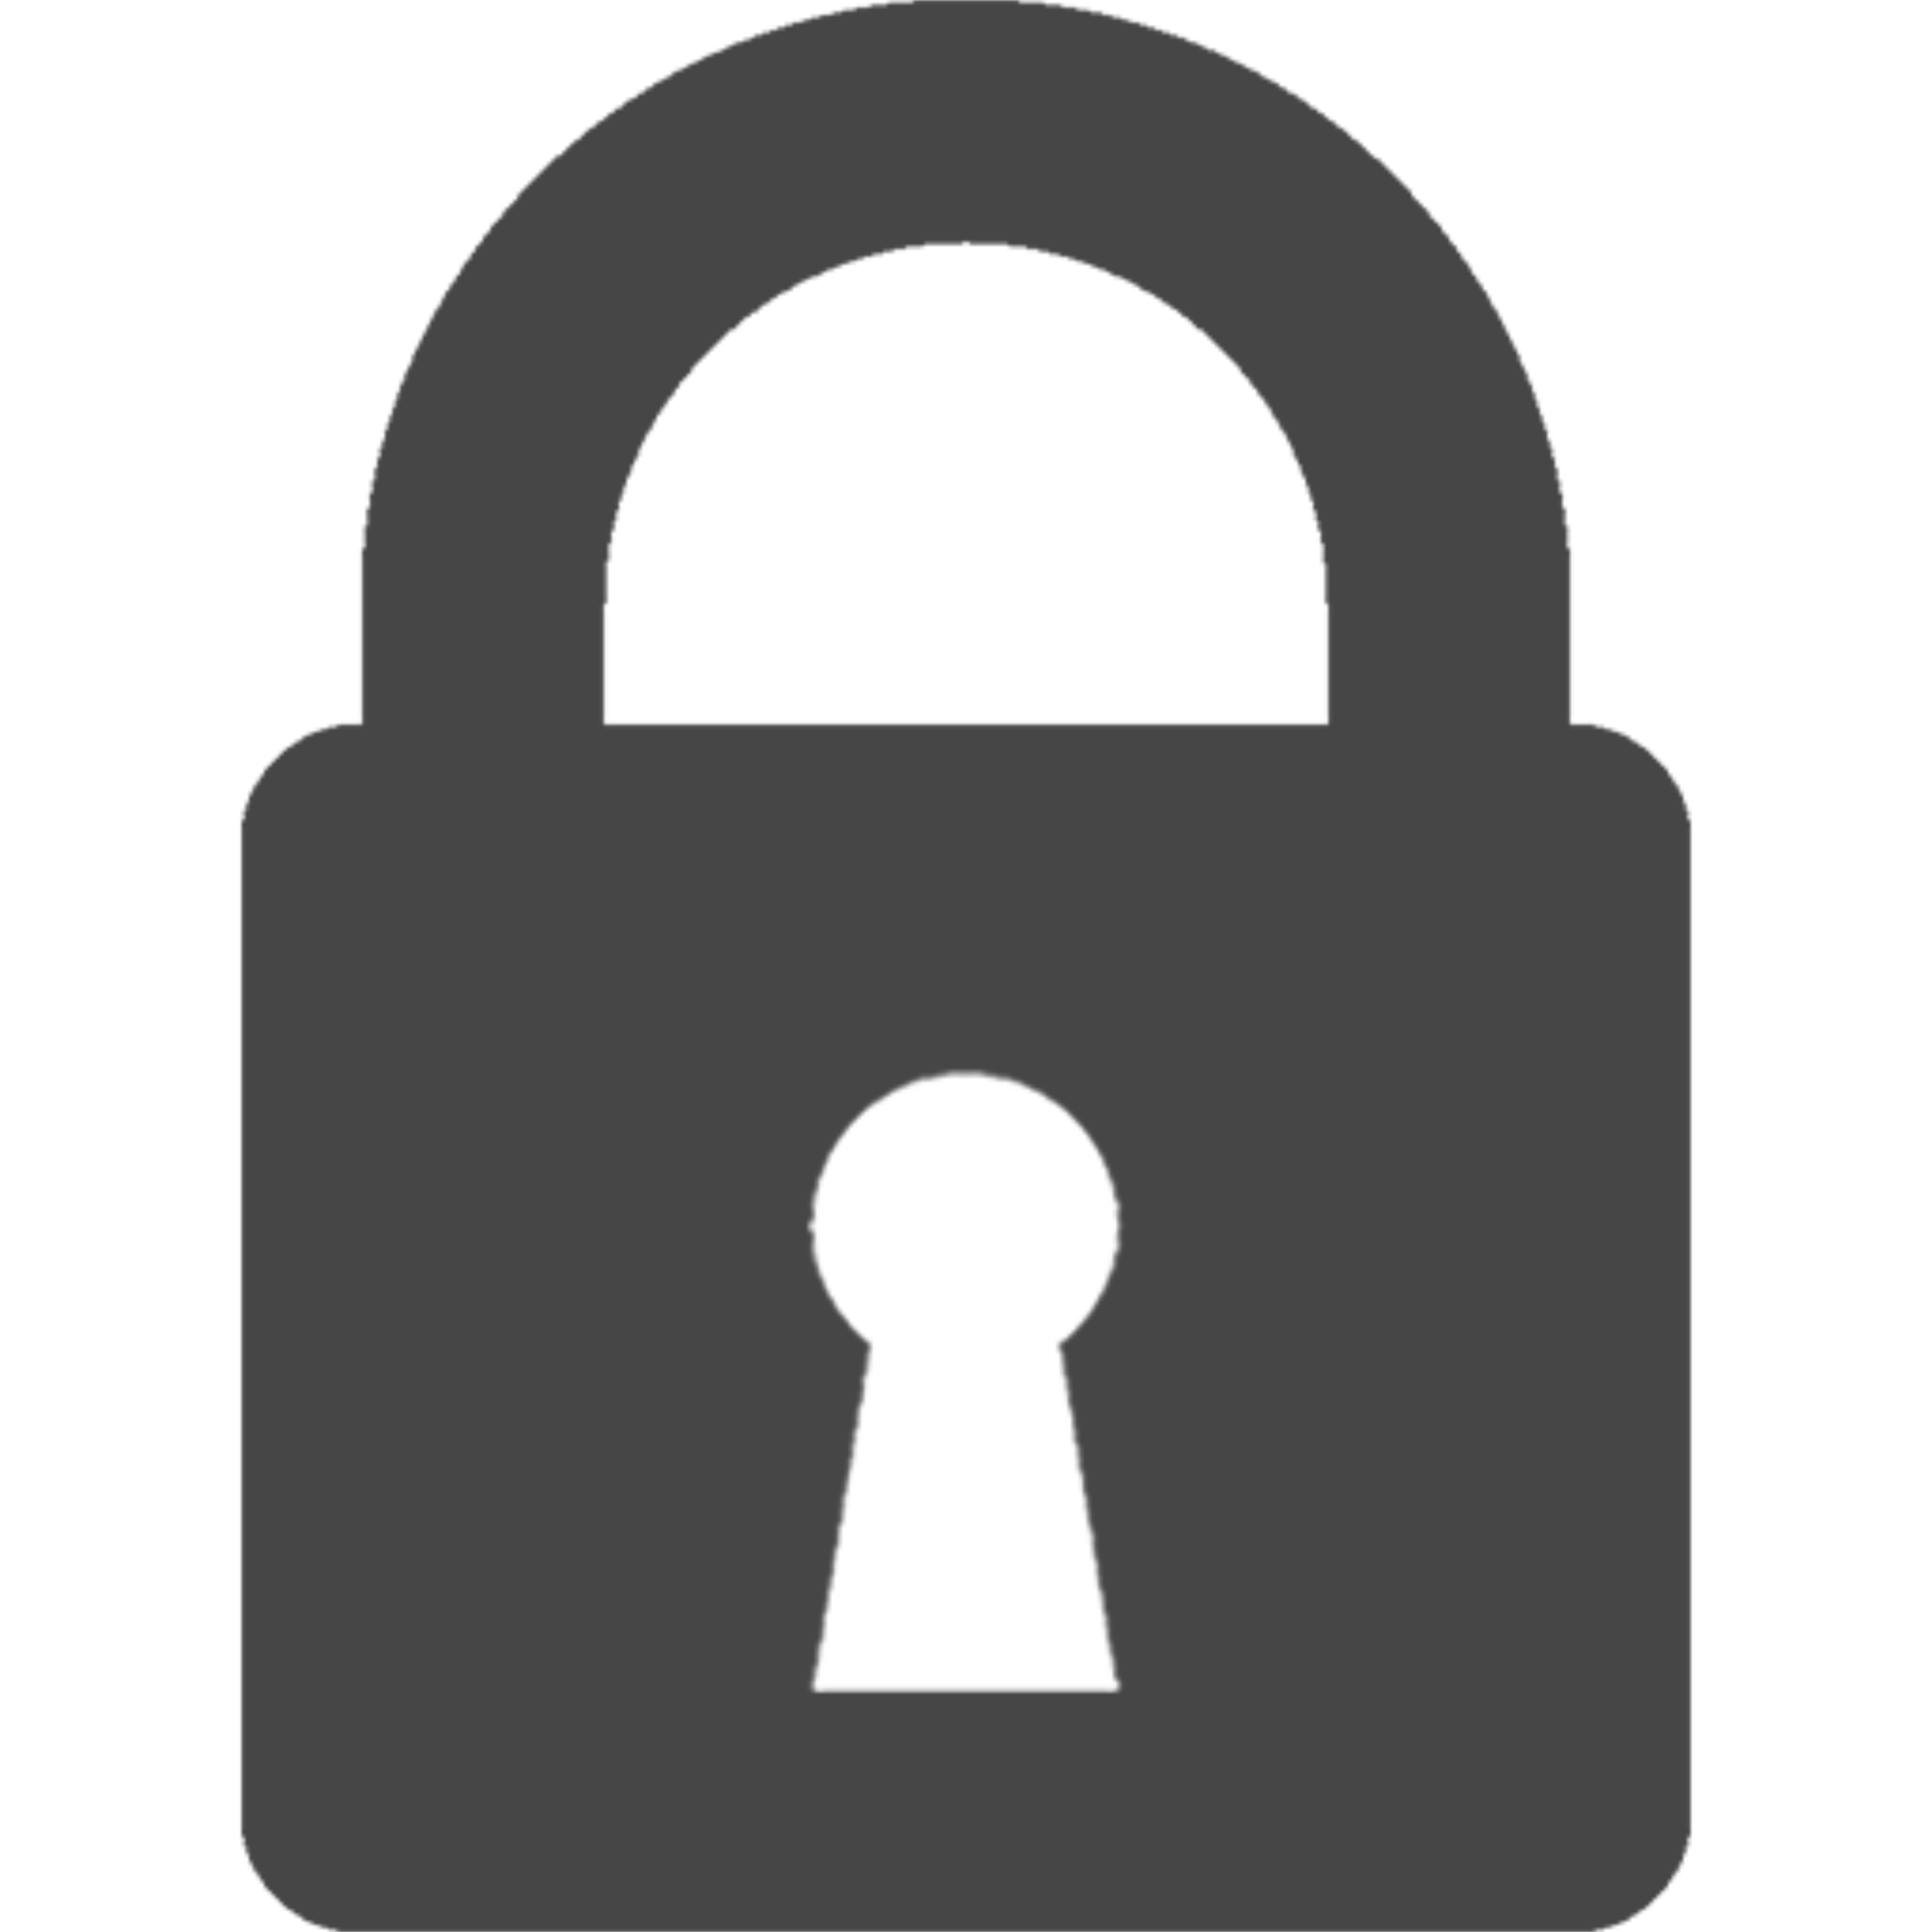 A lock symbol.